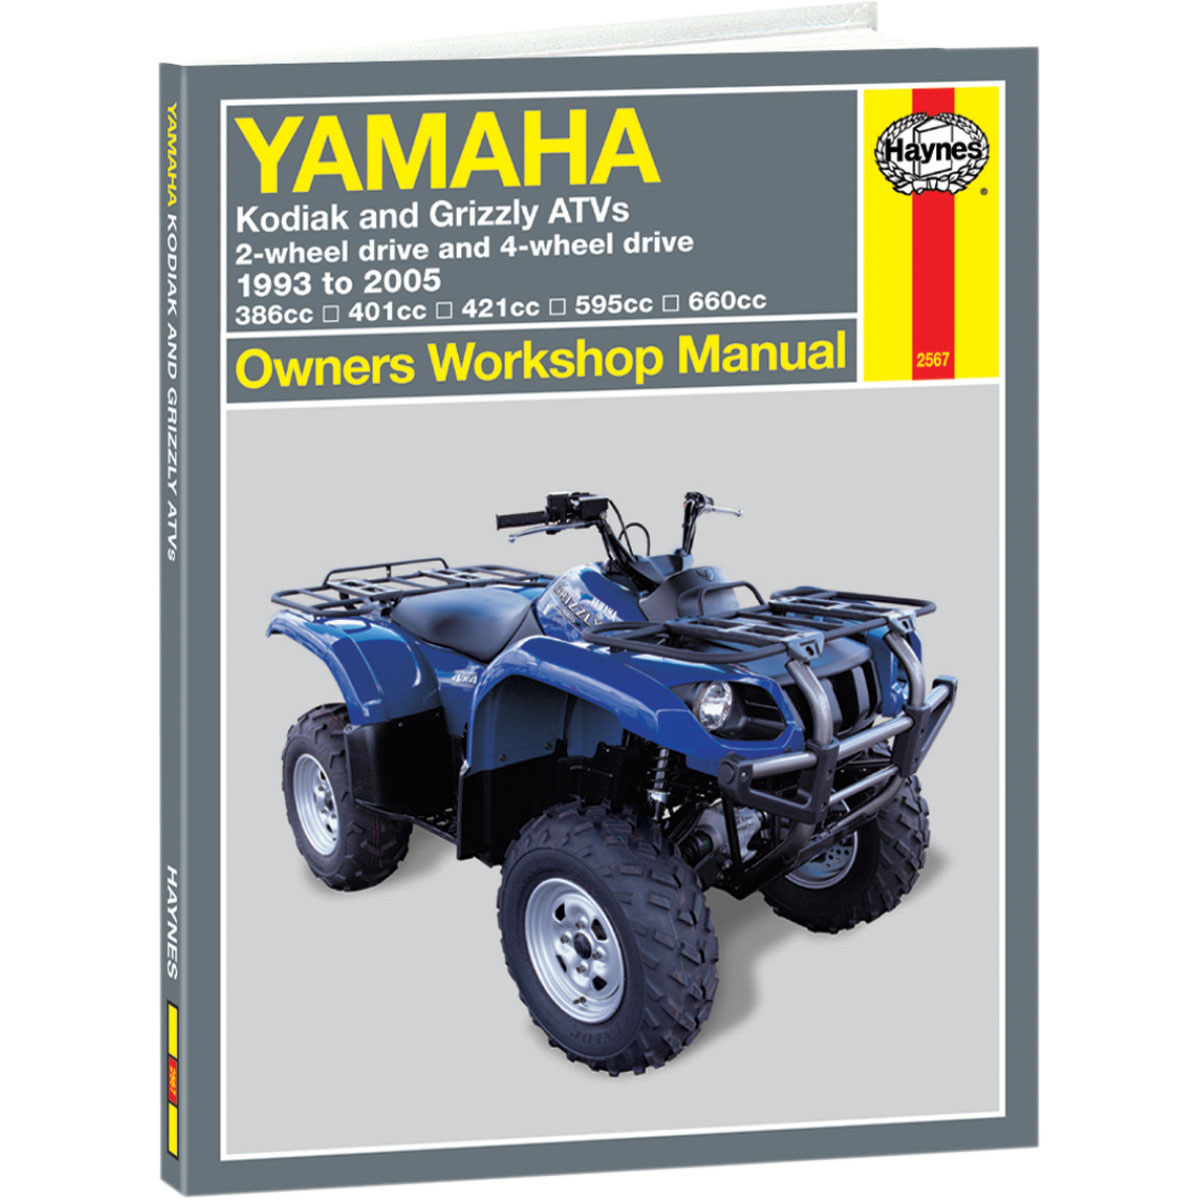 YAMAHA KODIAK AND GRIZZLY ATVS 1993-2005 Haynes Repair Manual 2567